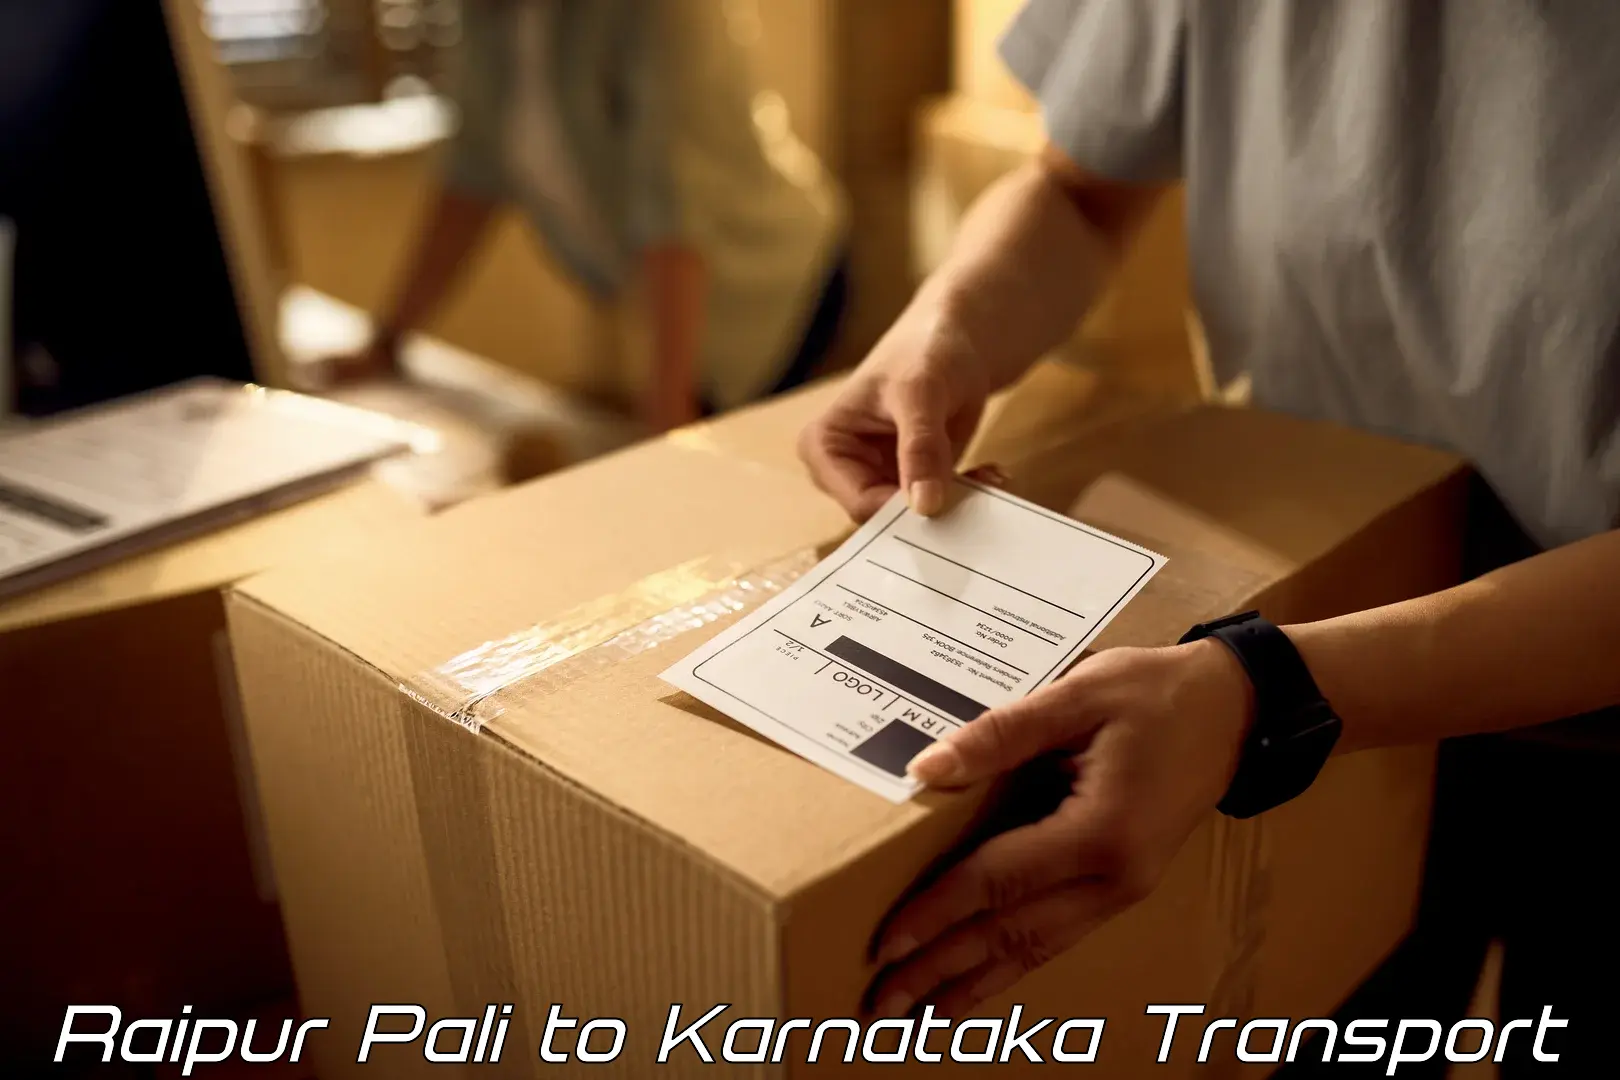 Container transport service Raipur Pali to Kulshekar